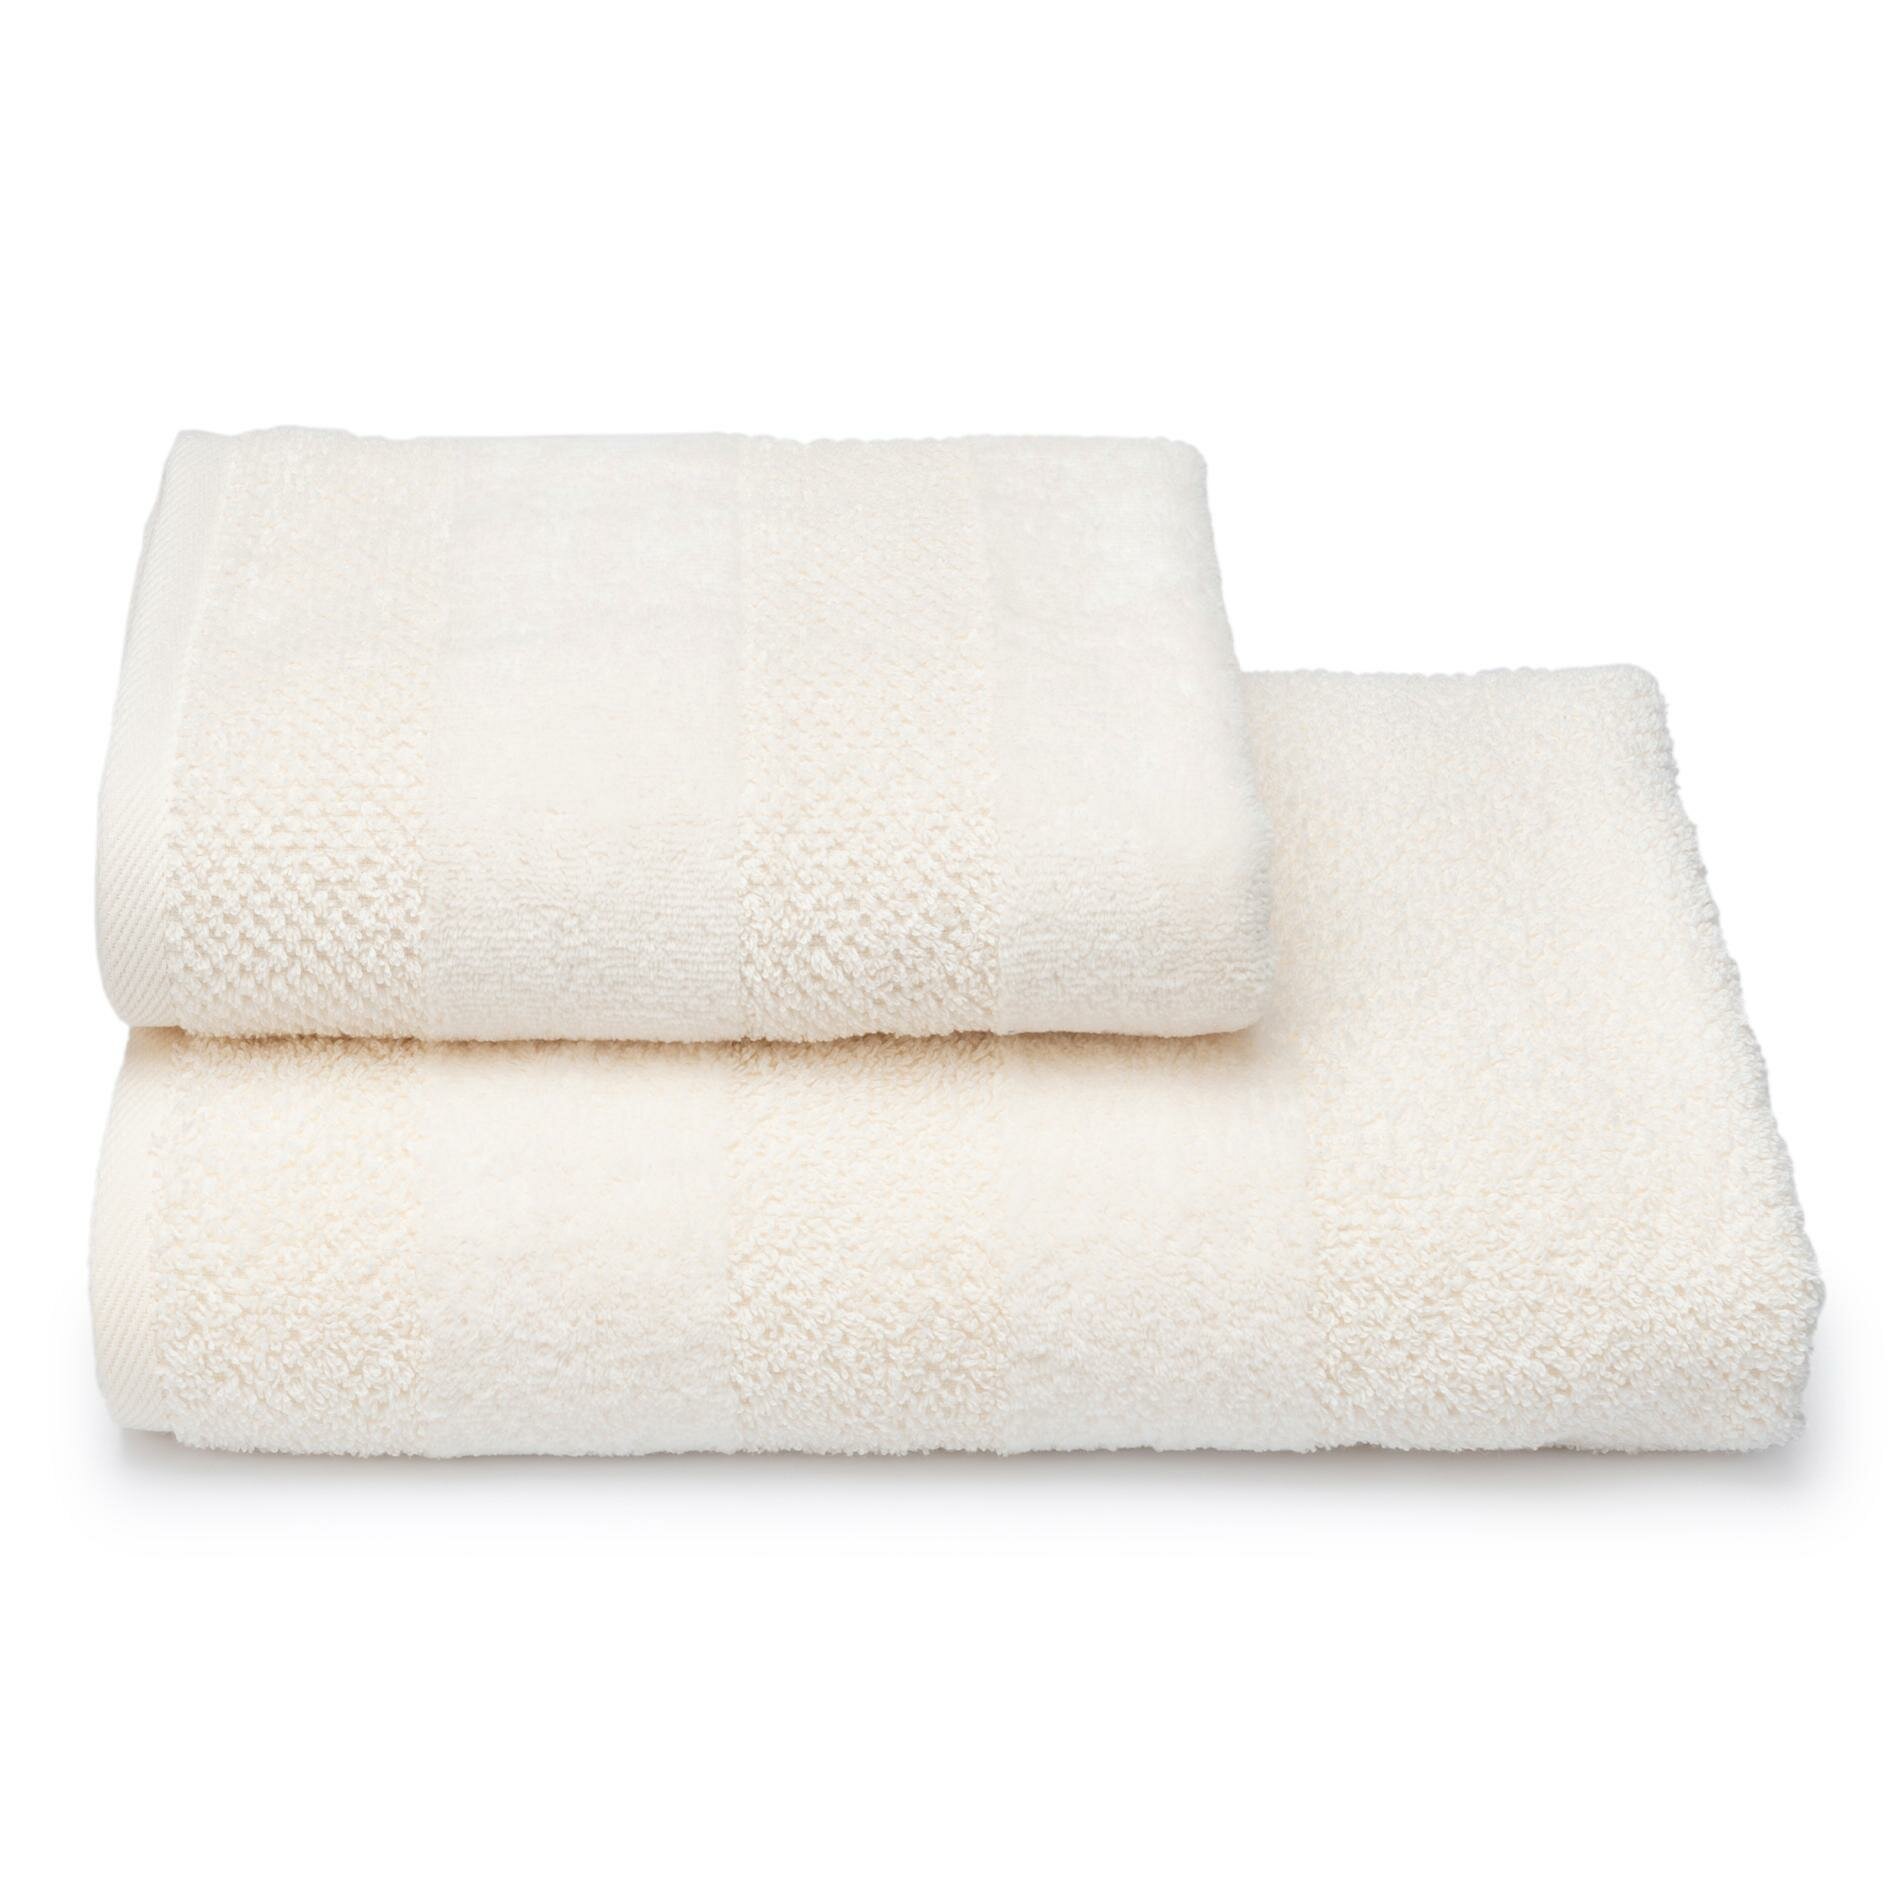 Полотенце махровое 50х90 см для ванной, лица и рук, Cleanelly Heat цвет молочный, 1 штука